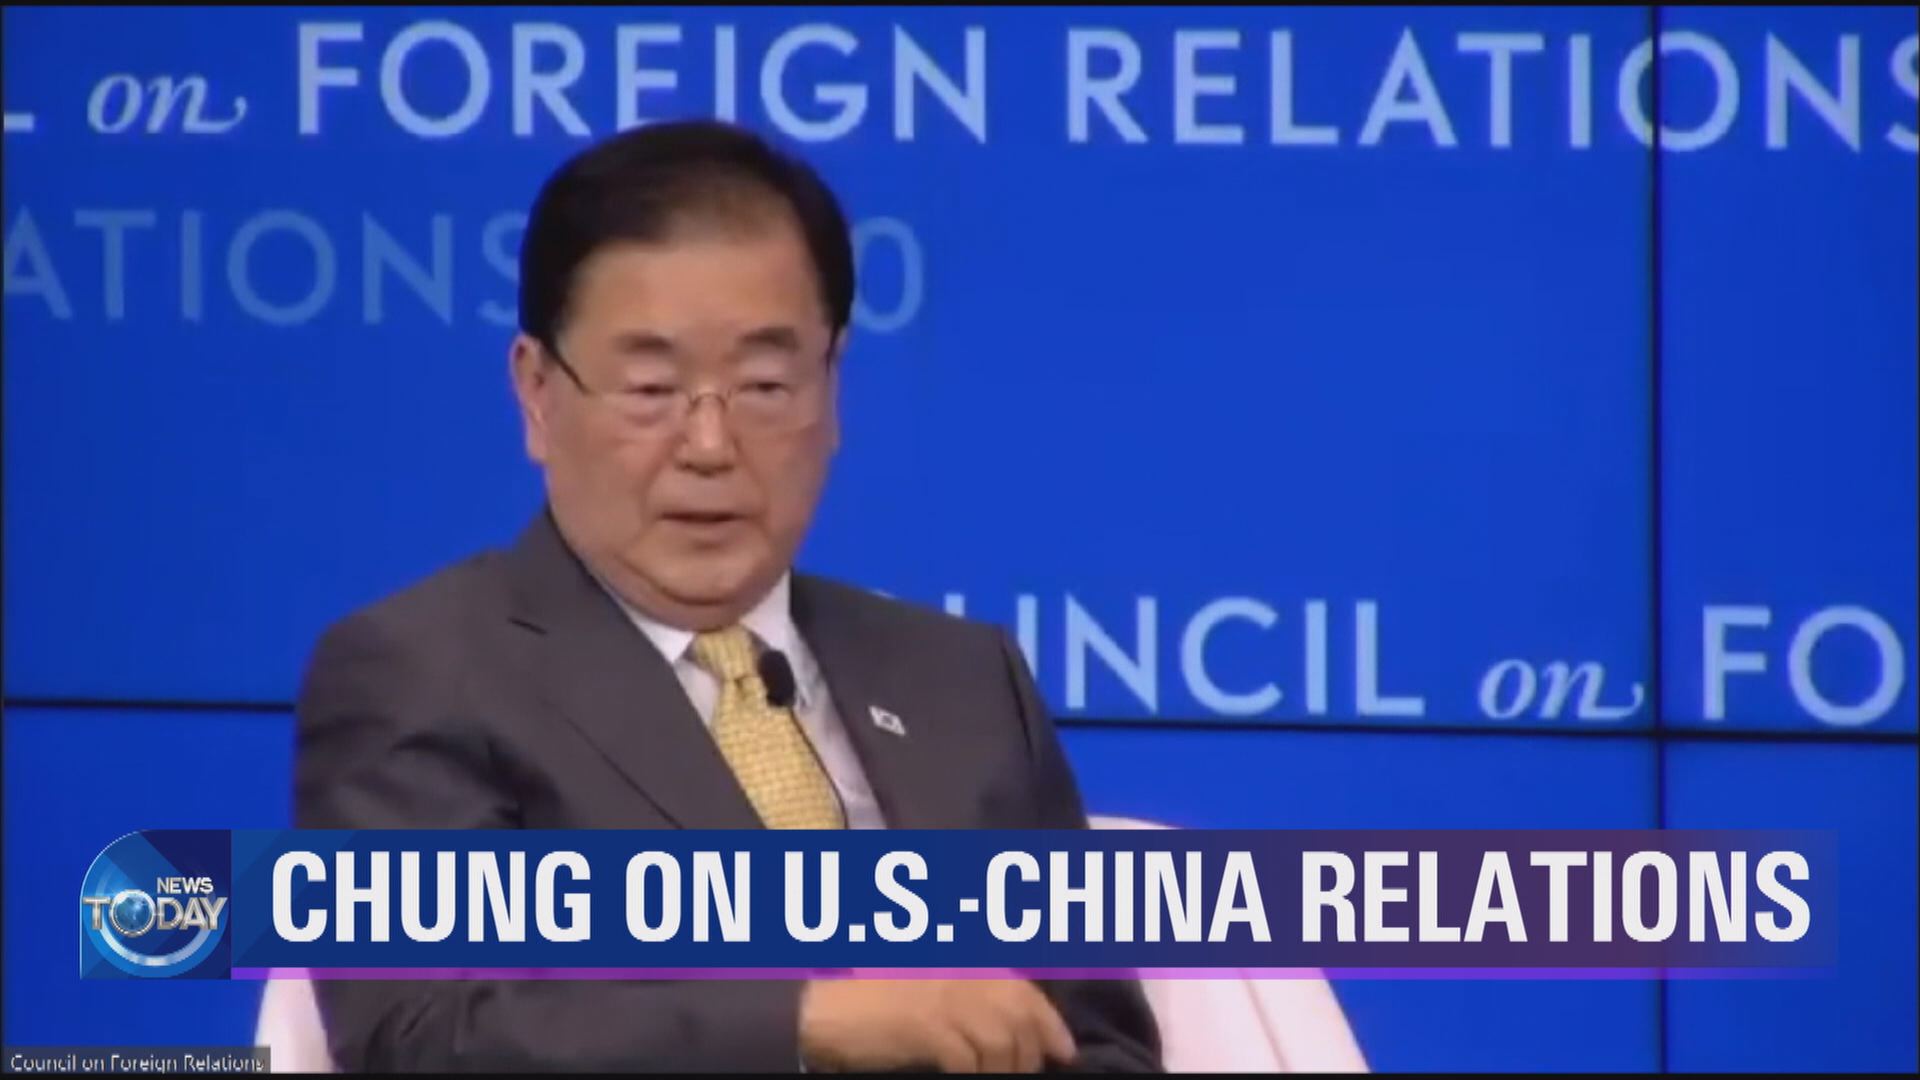 CHUNG ON U.S.-CHINA RELATIONS